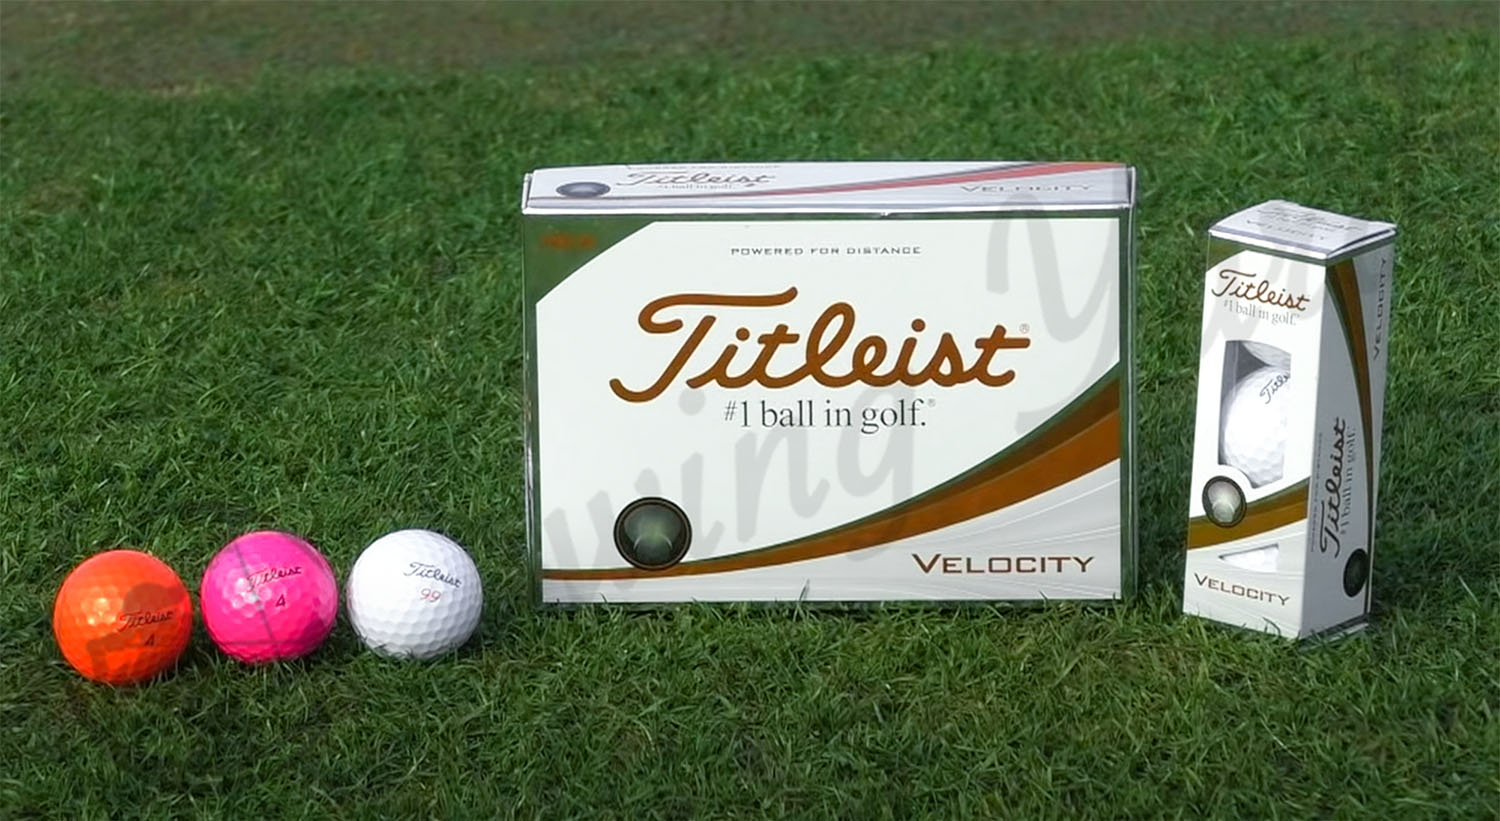 The Titleist Velocity golf balls